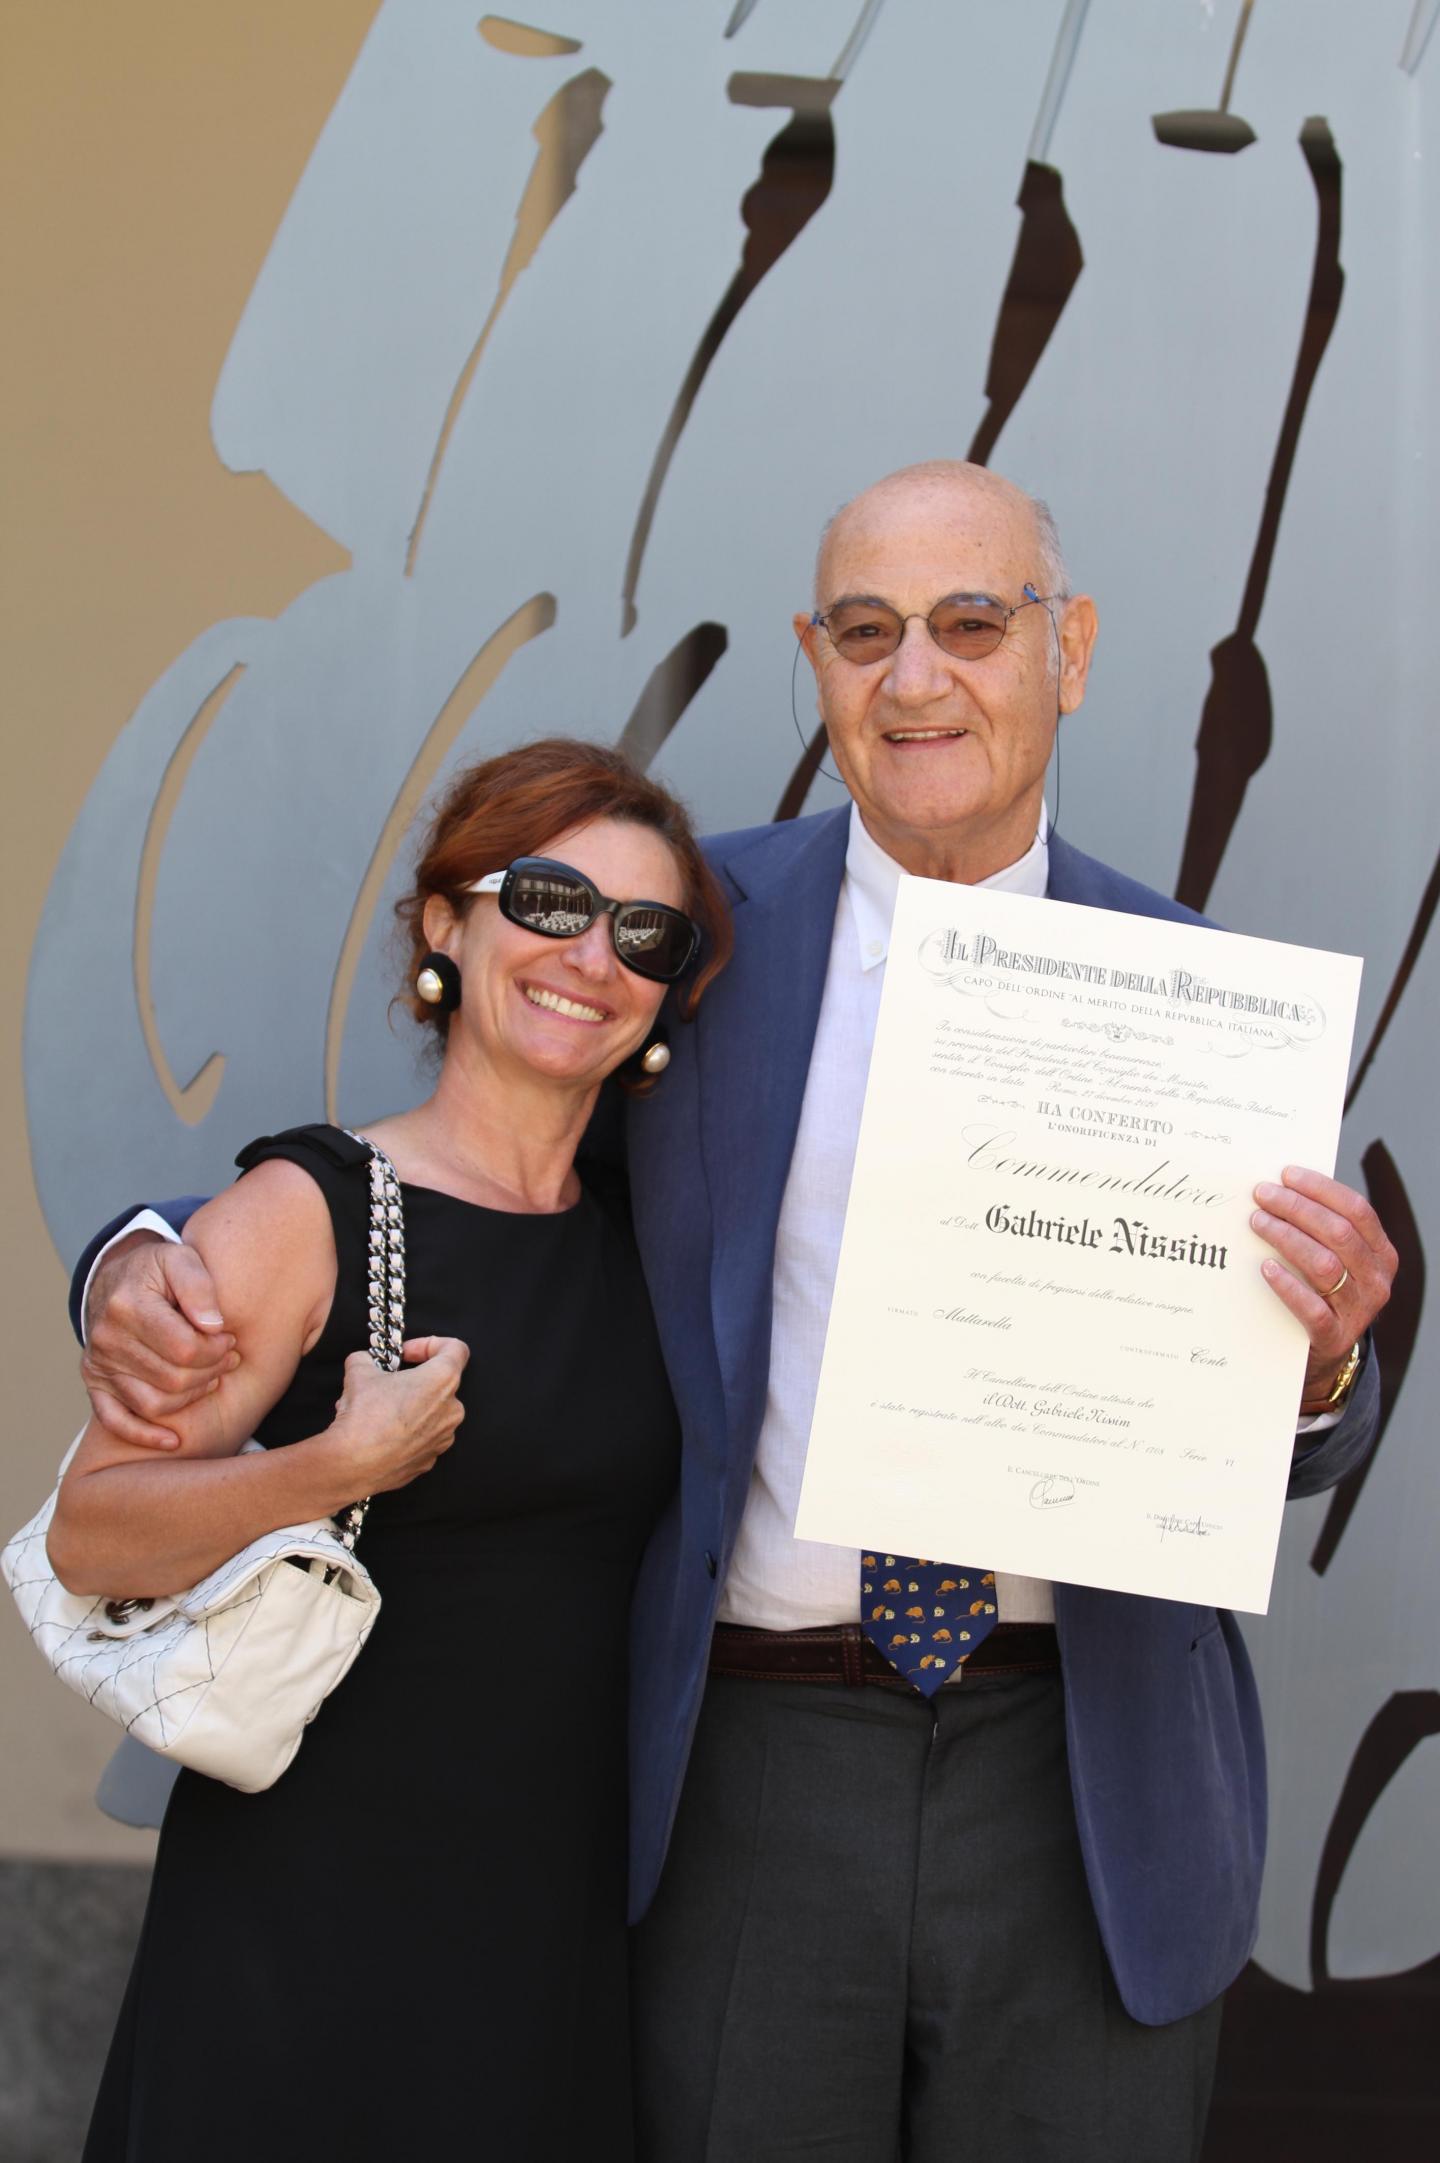 Gabriele Nissim, here with his wife Santa Schinardi, shows the award